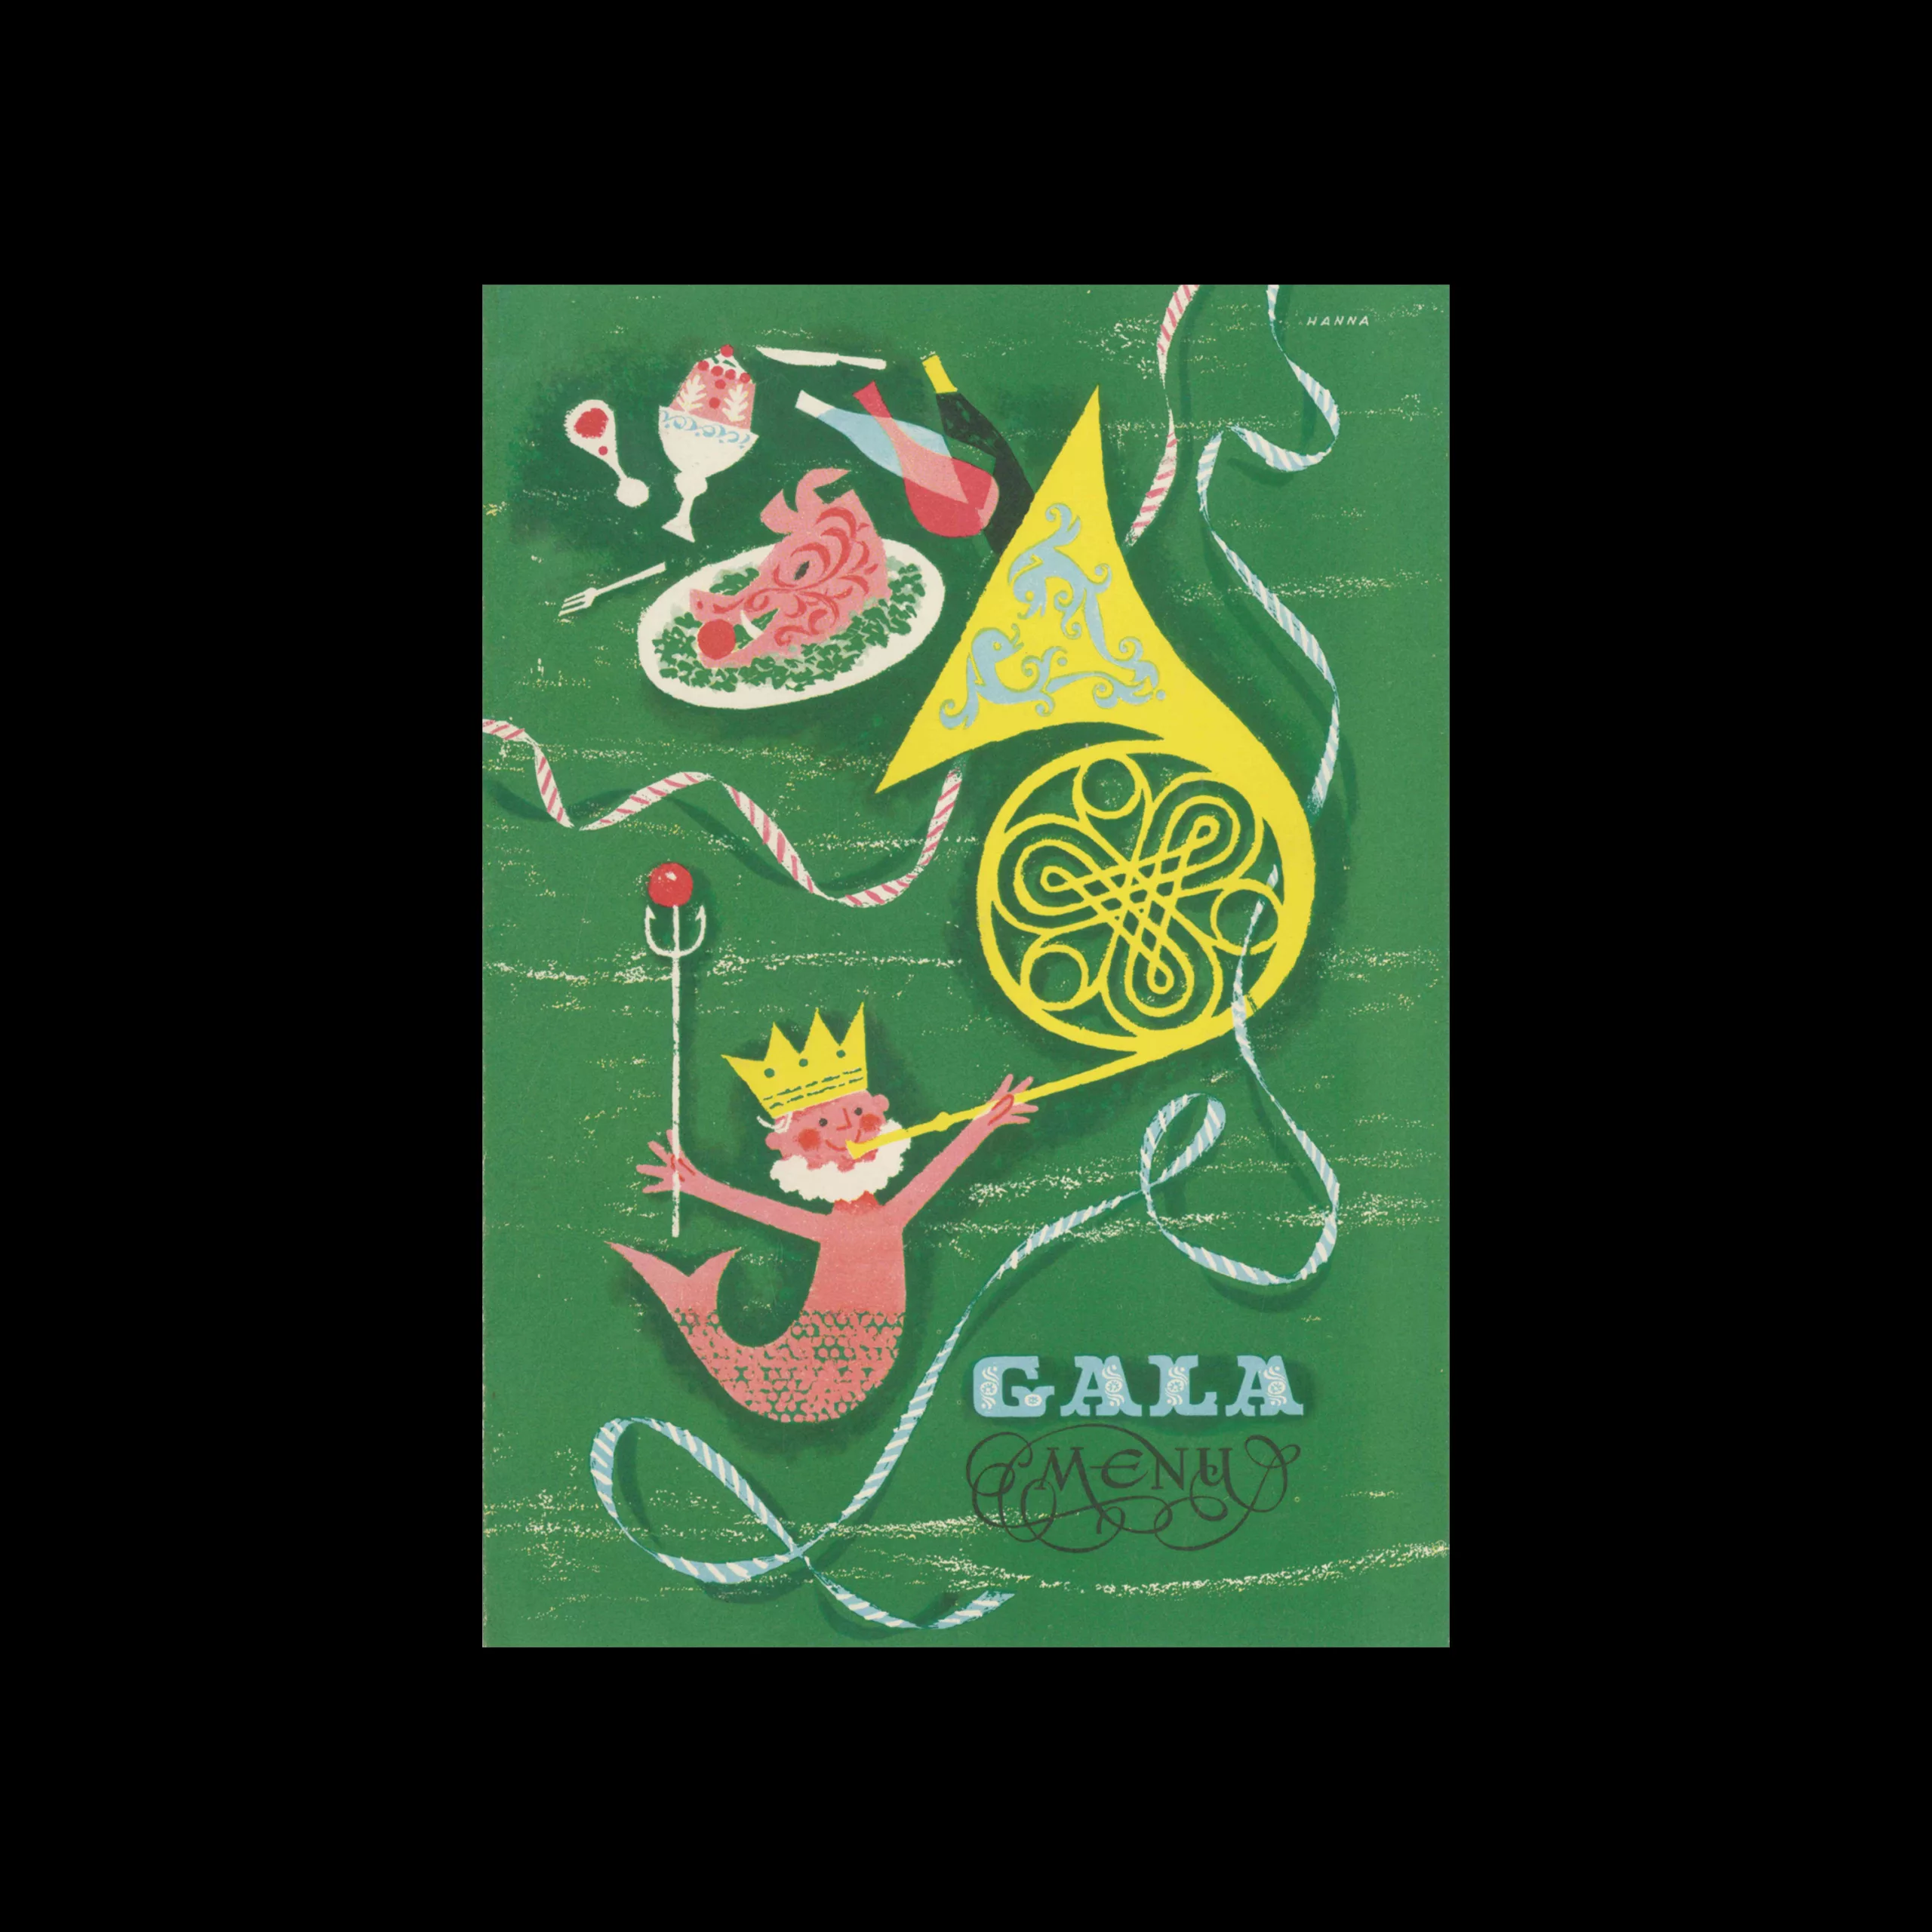 P&O Gala Menu, c. 1960. Cover design by John Hanna 